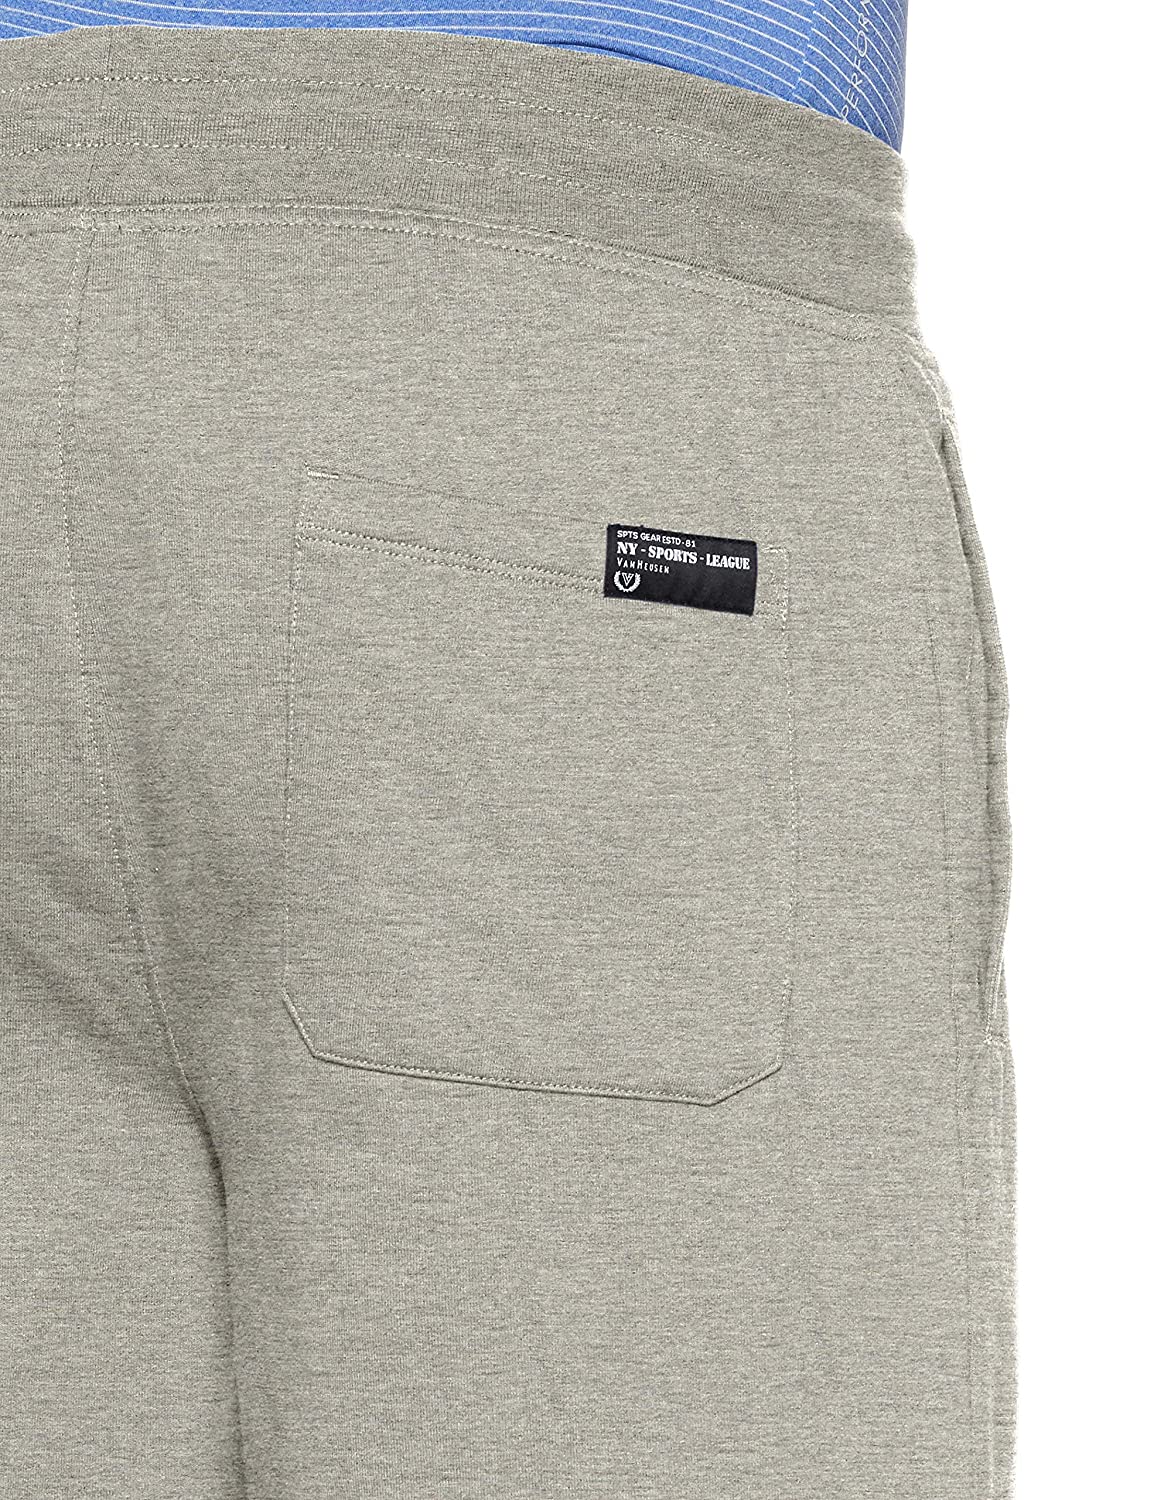 Van Heusen Men's Grey Fashion Causal Cotton Shorts - Stilento